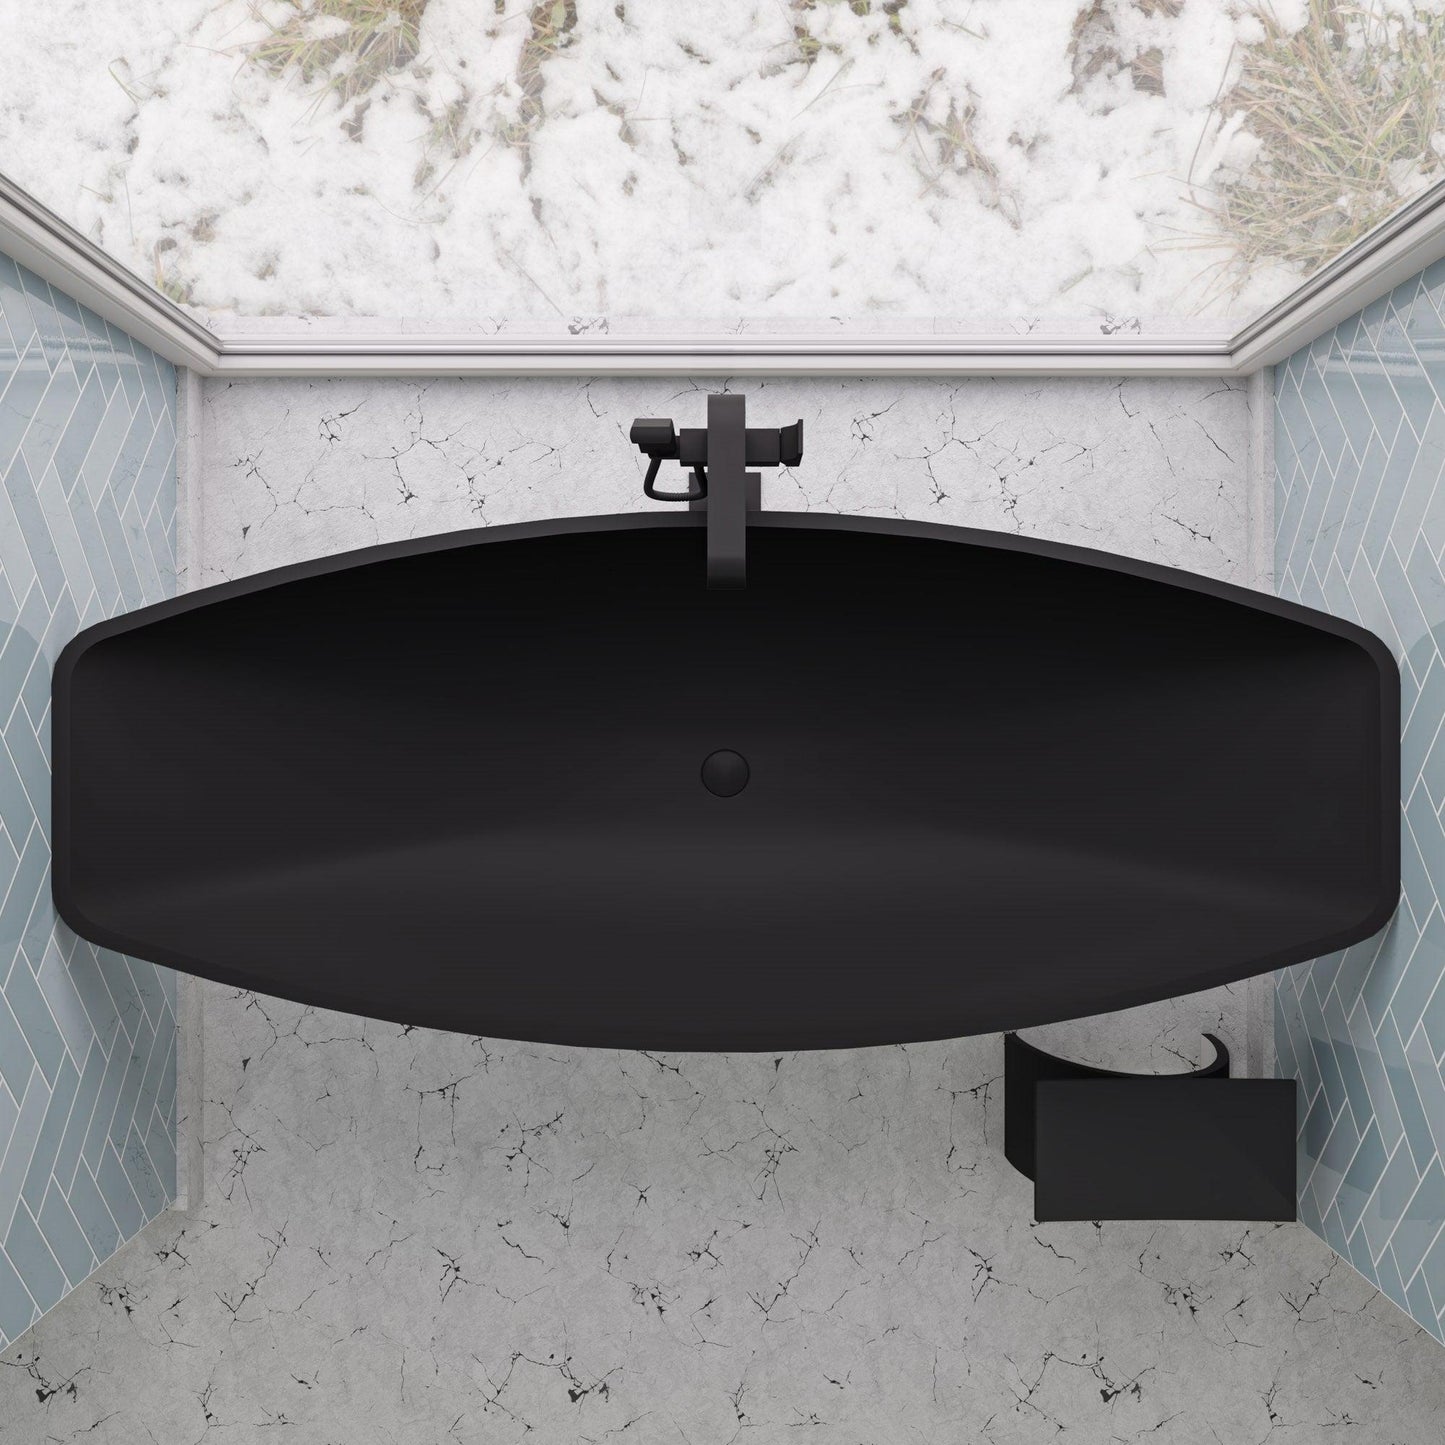 ALFI Brand AB2180-BM Black Matte Single Lever Floor Mounted Tub Filler Mixer With Hand Held Shower Head